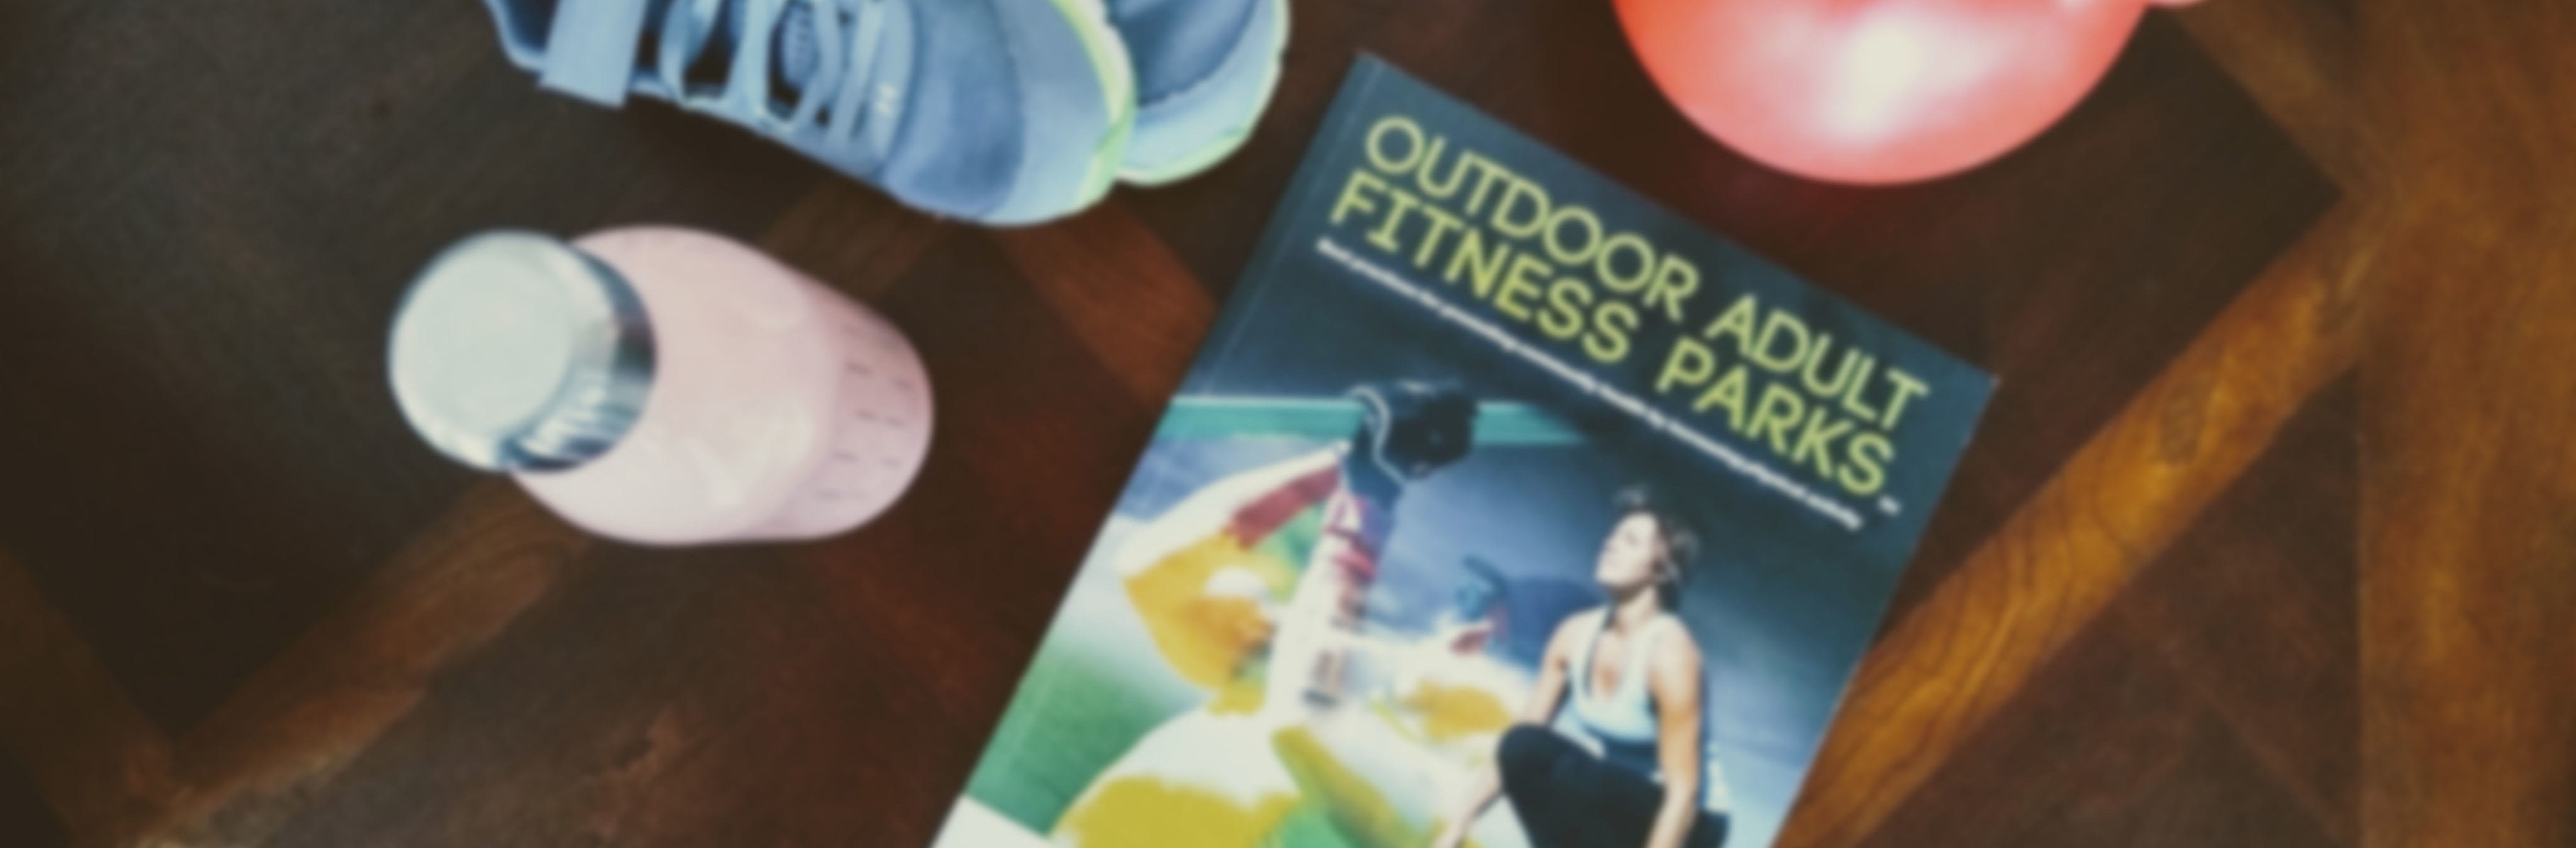 Outdoor Fitness 101: Better Community Health